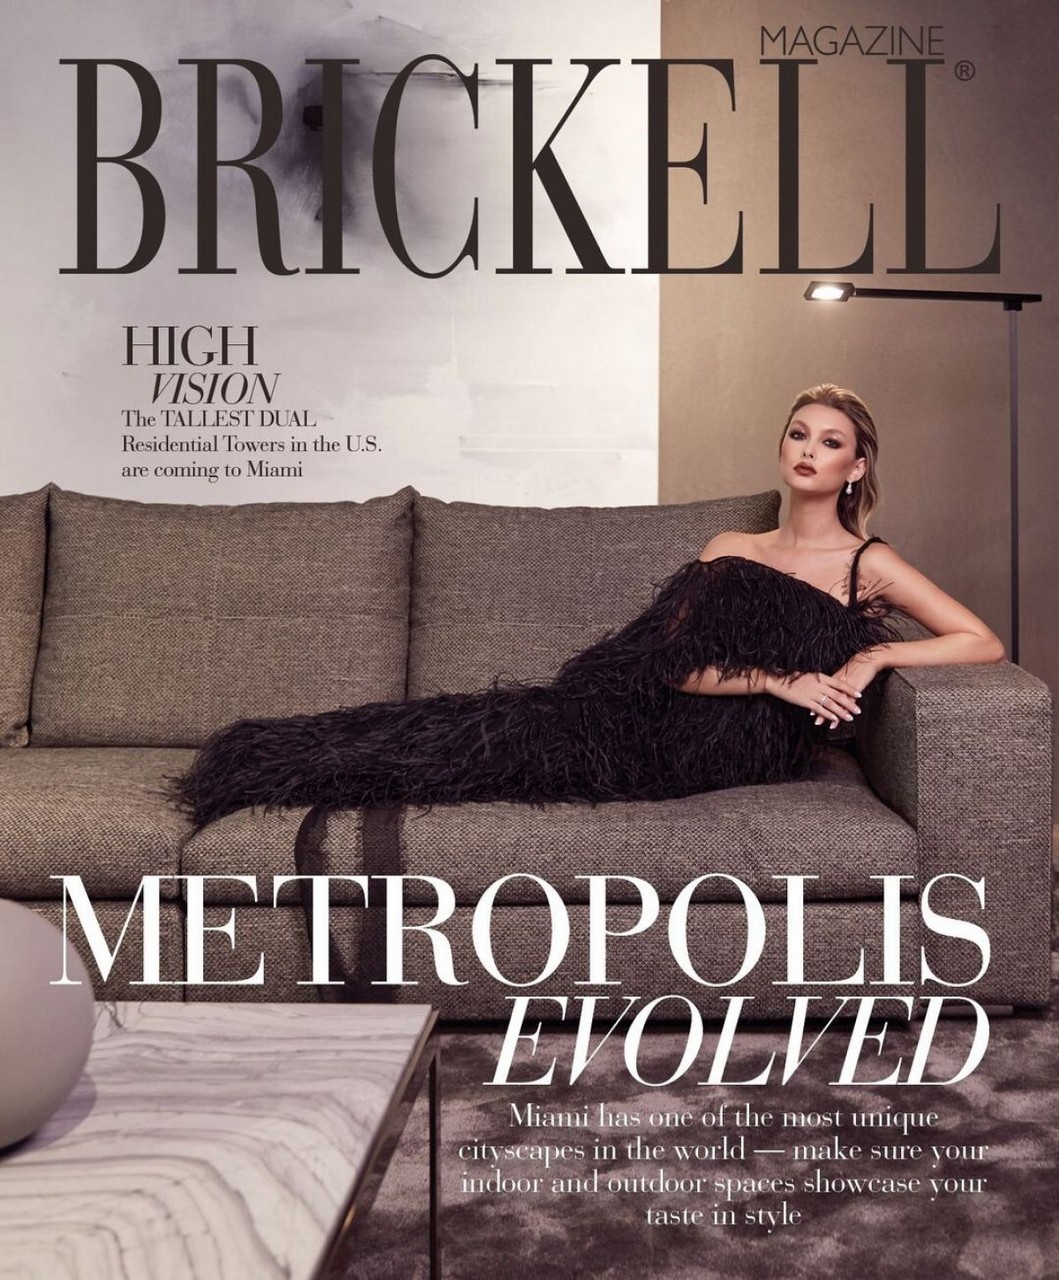 Chloe Avenaim For Brickell Magazine November